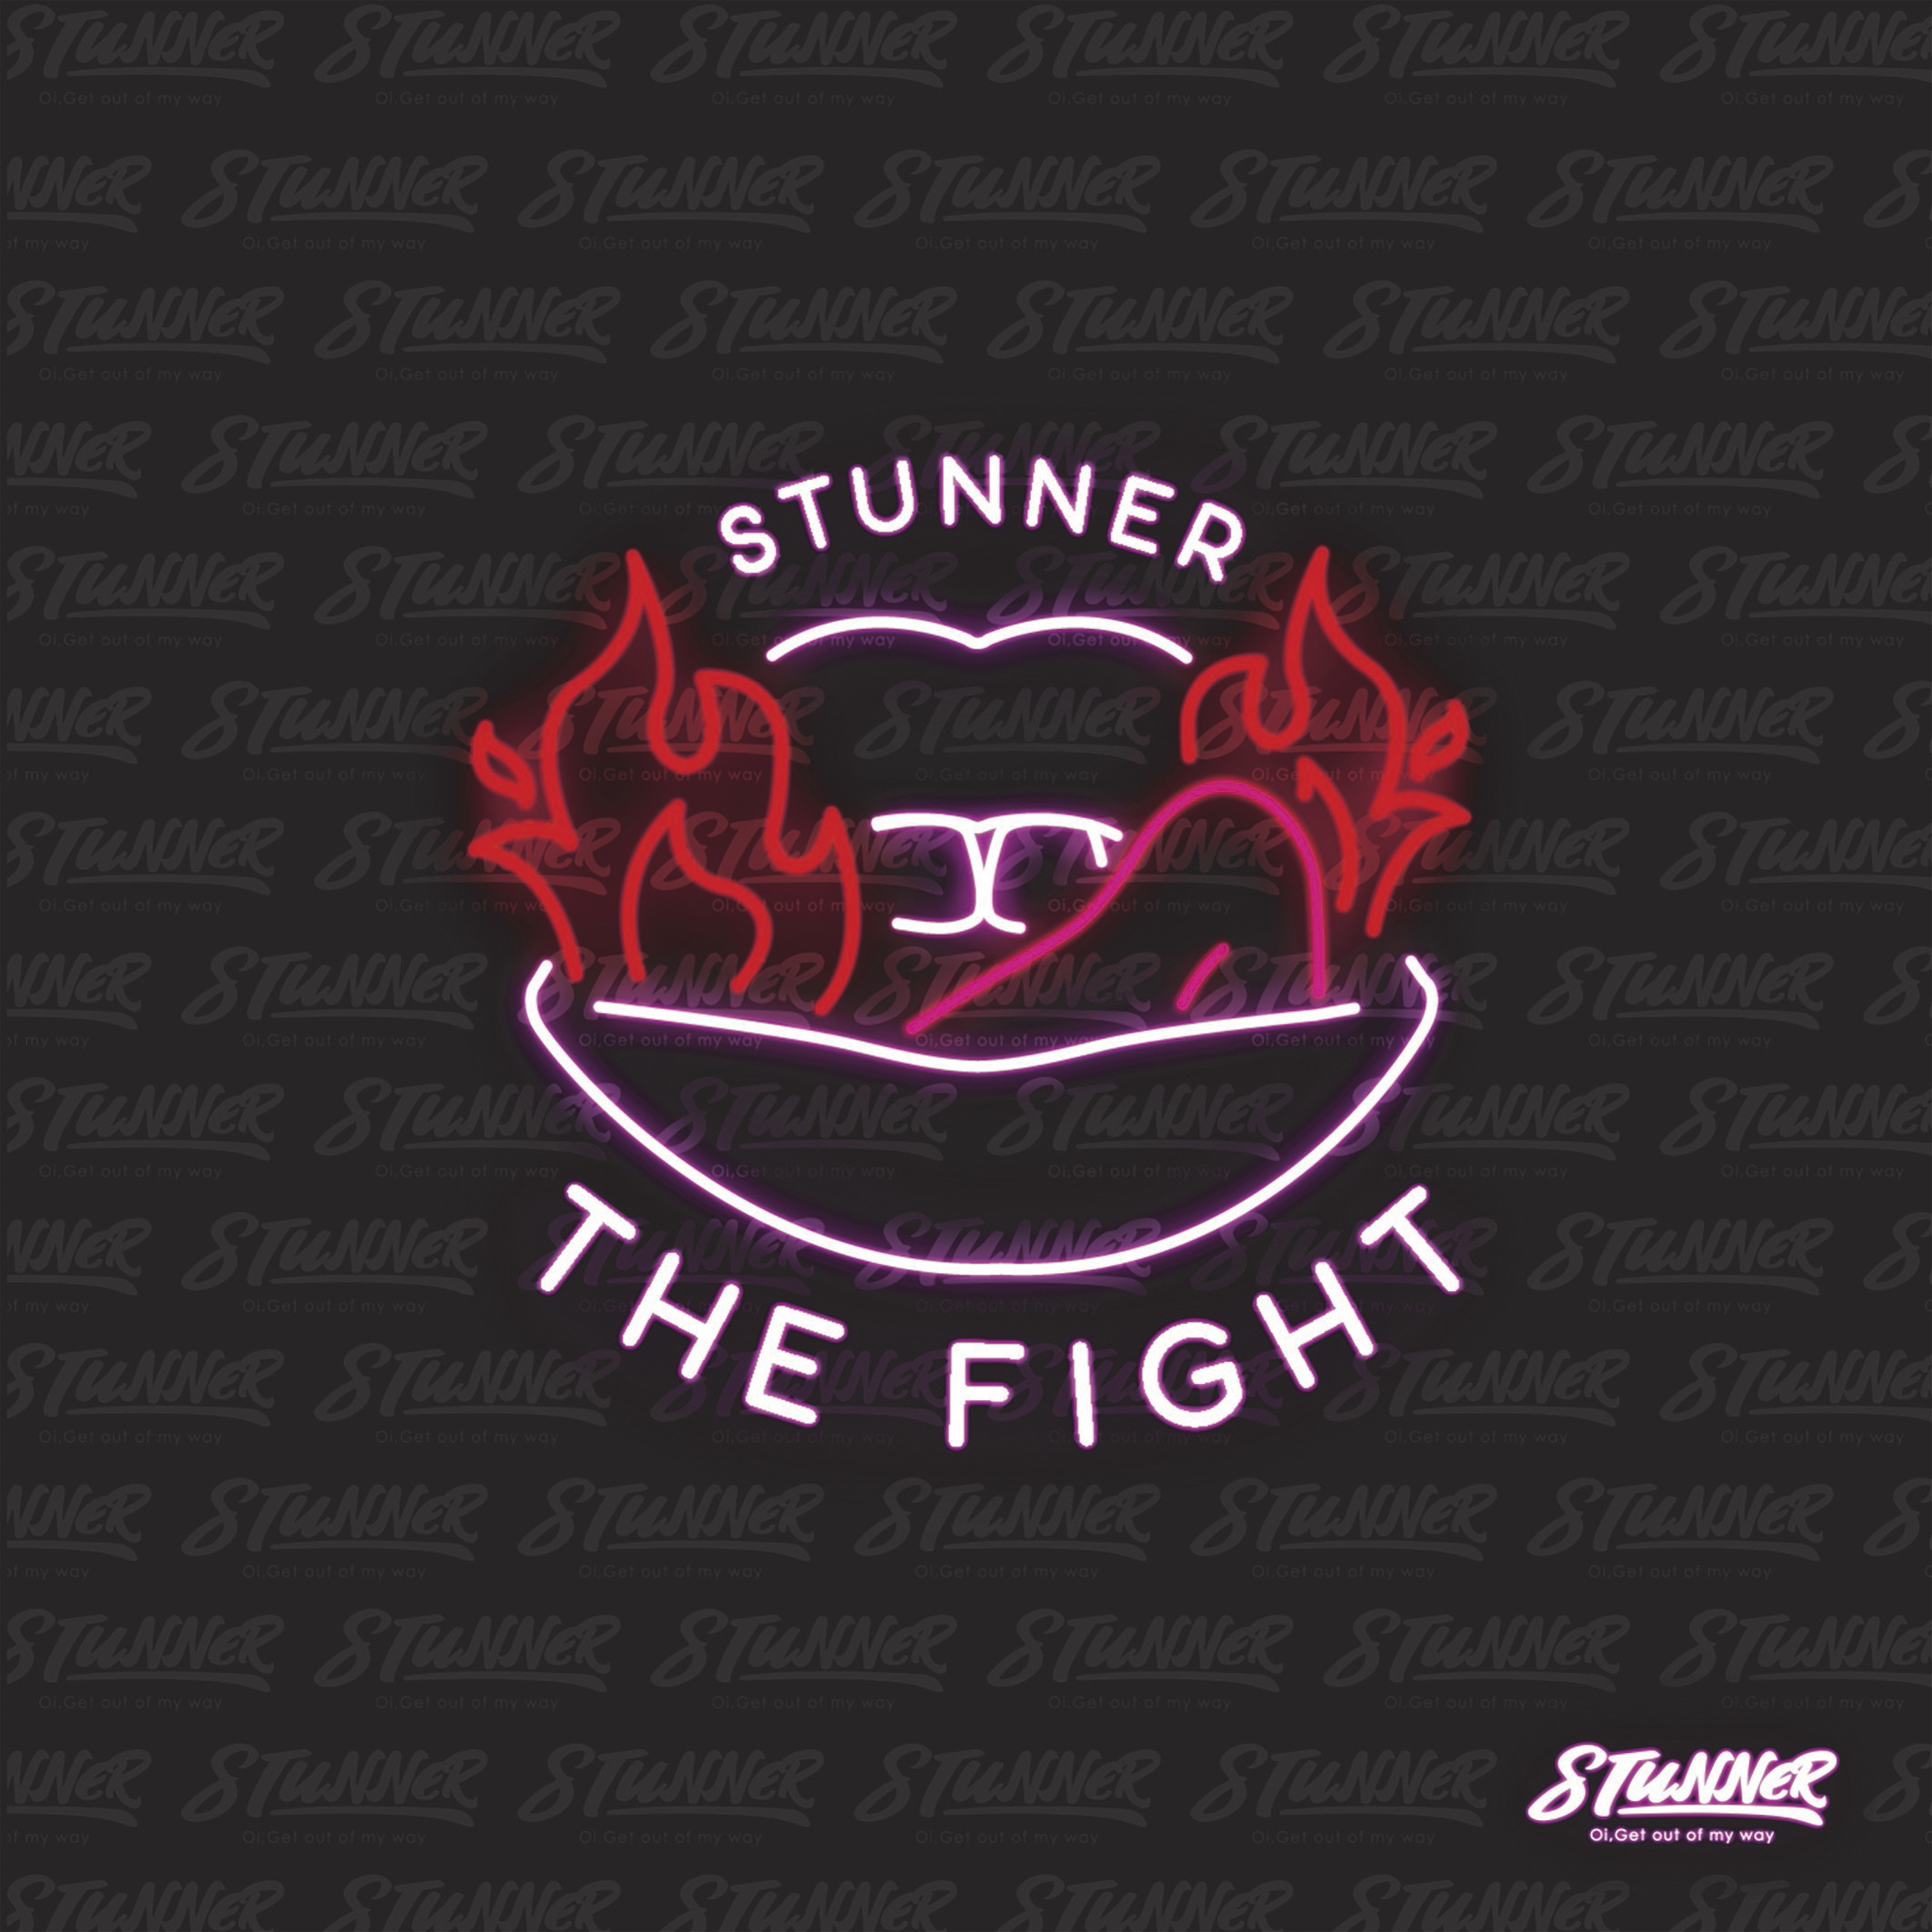 THE FIGHT/STUNNER